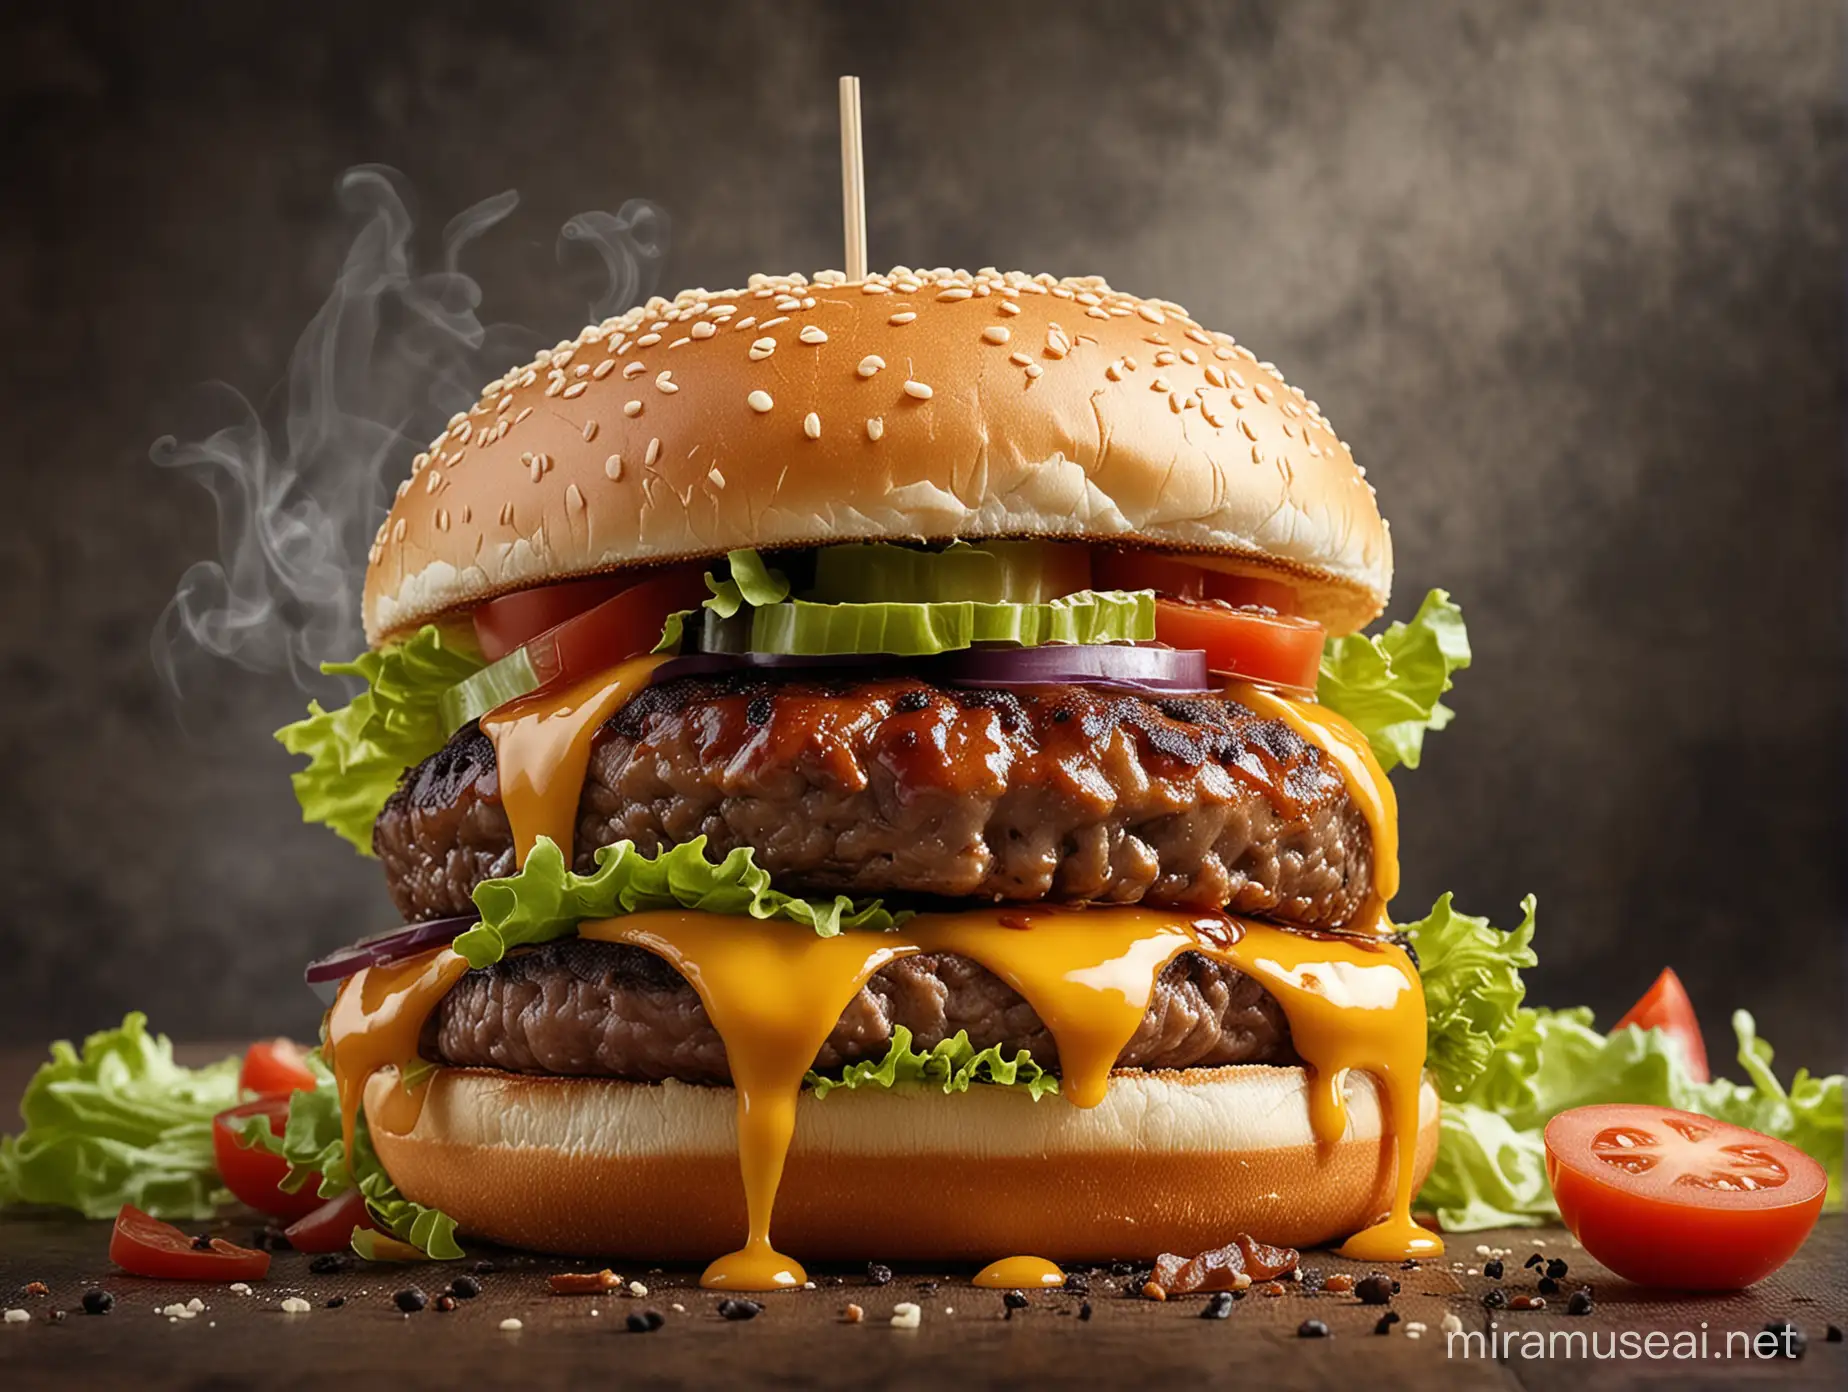 Irresistible Mouthwatering Hamburger on Vibrant Background